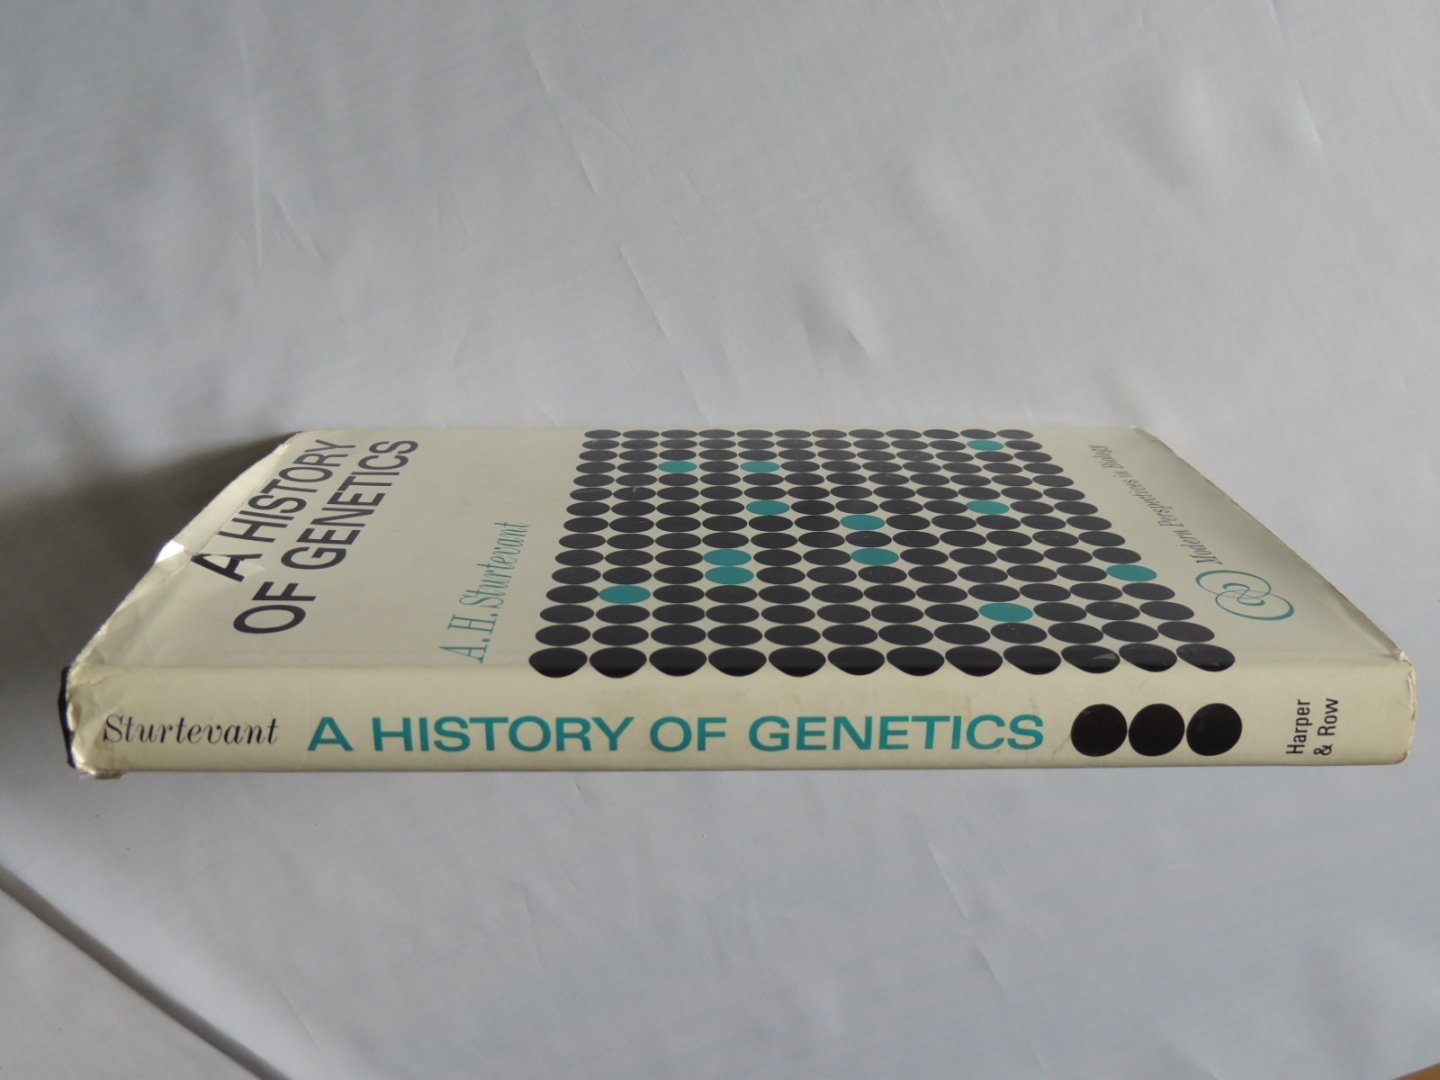 Sturtevant, A. H. - A History of Genetics